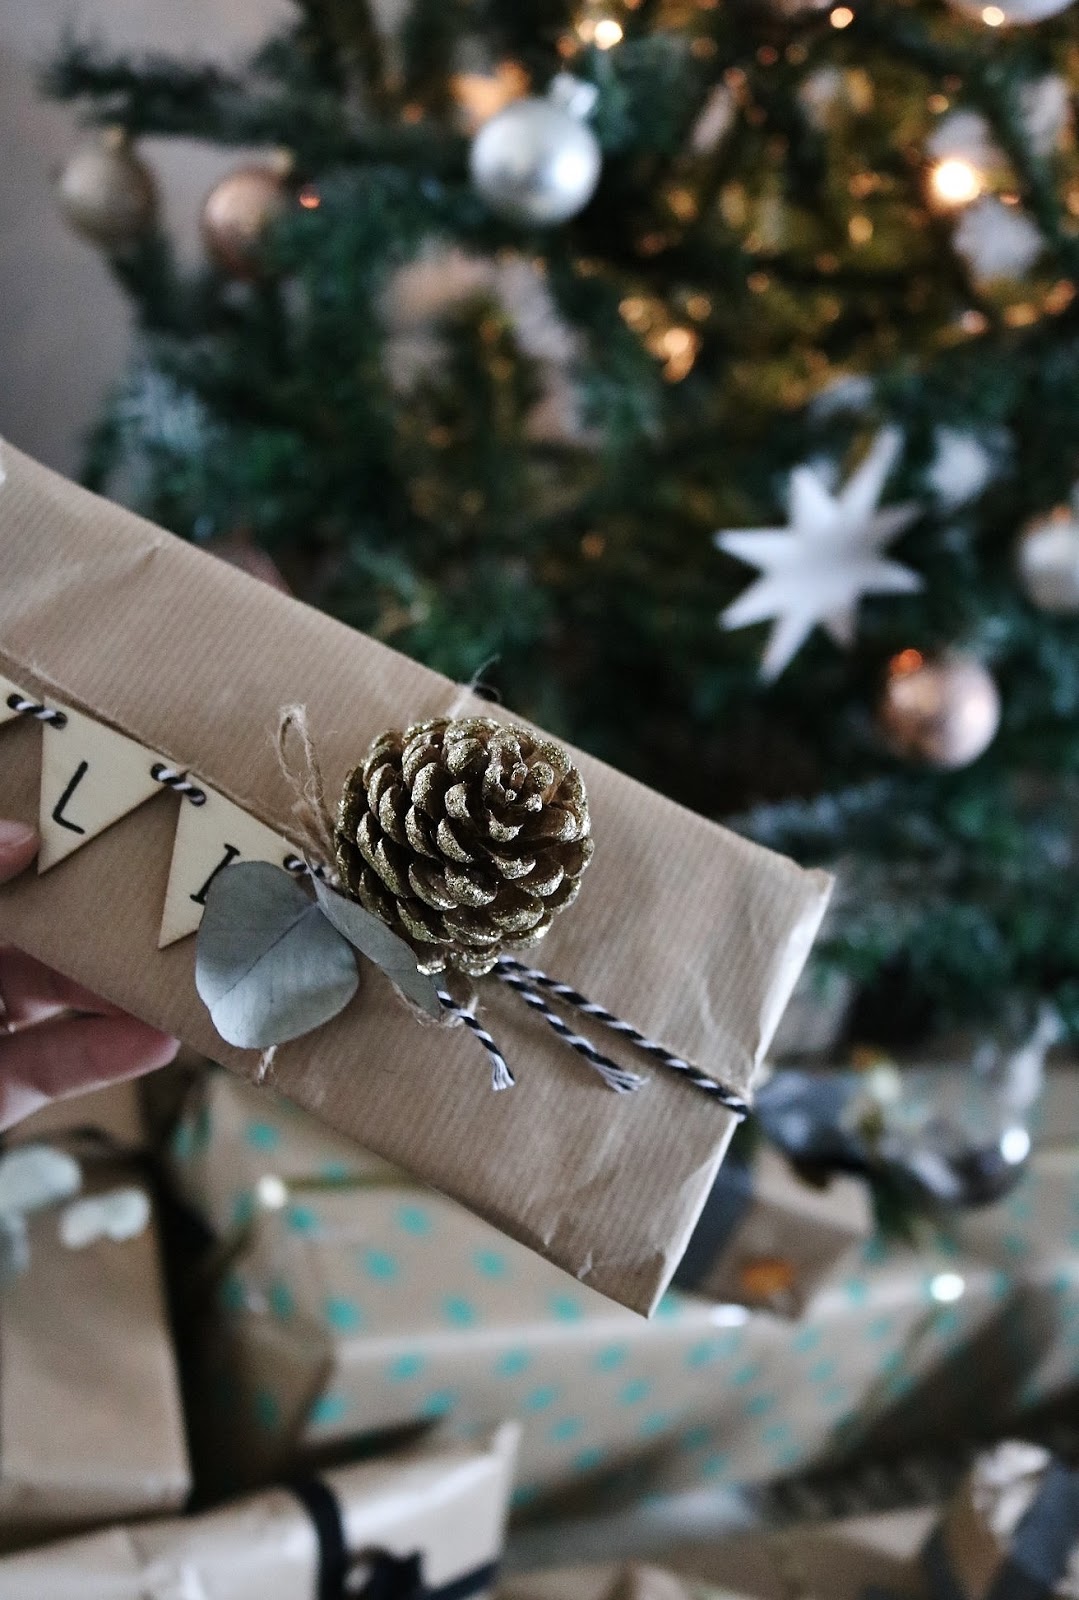 pauline-dress-besancon-noel-emballages-cadeaux-gift-christmas-2017-2018-kraft-nature-sapin-panier-garni-ruban-decore-etoile-dore-or-action-hema